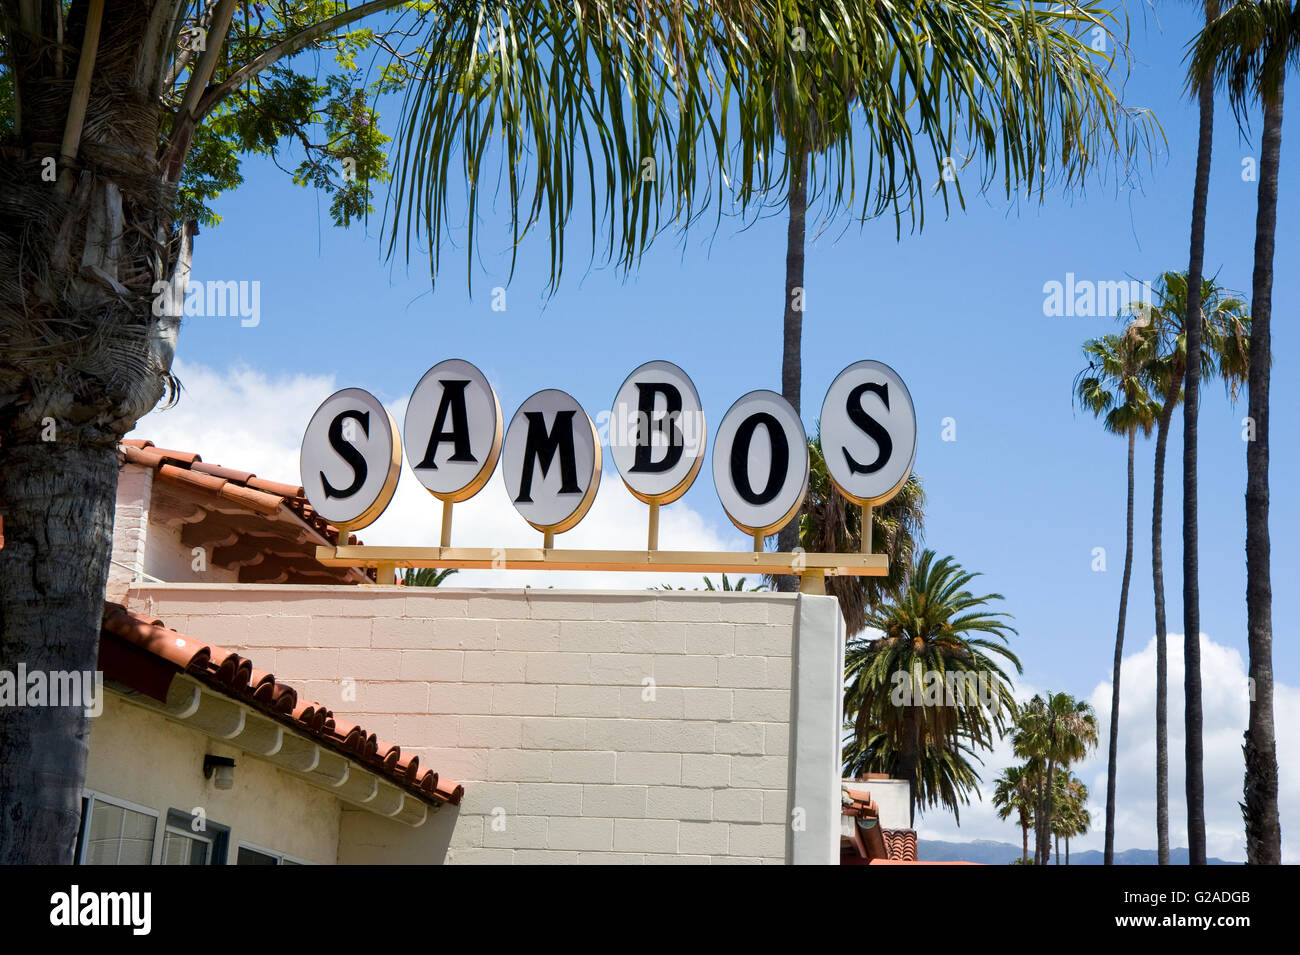 Sambos restaurant sign in Santa Barbara Stock Photo